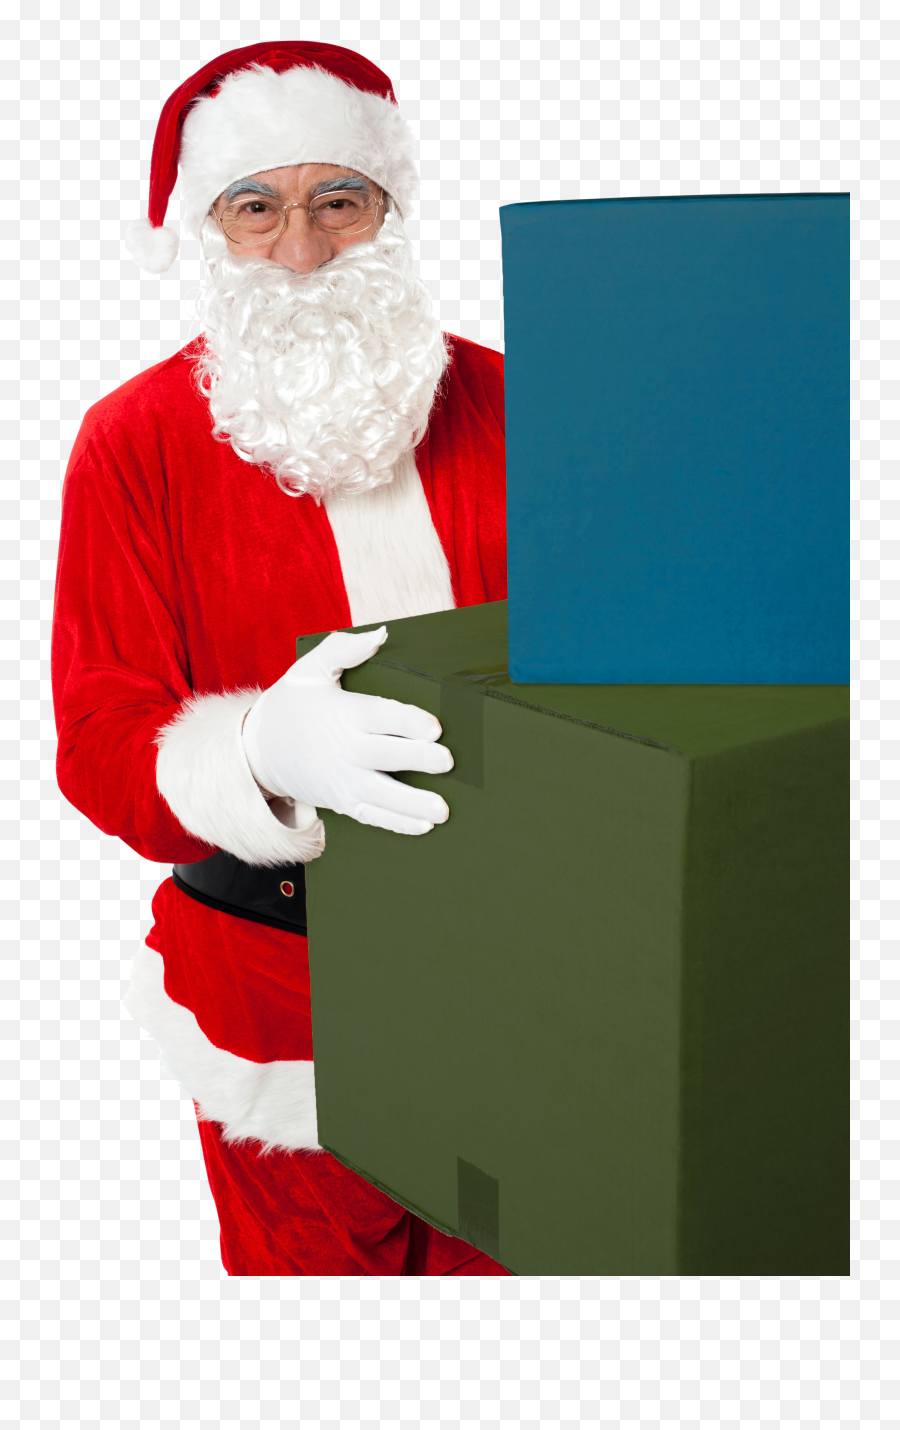 Santa Claus With Gifts Png Play - Santa Claus,Gifts Png